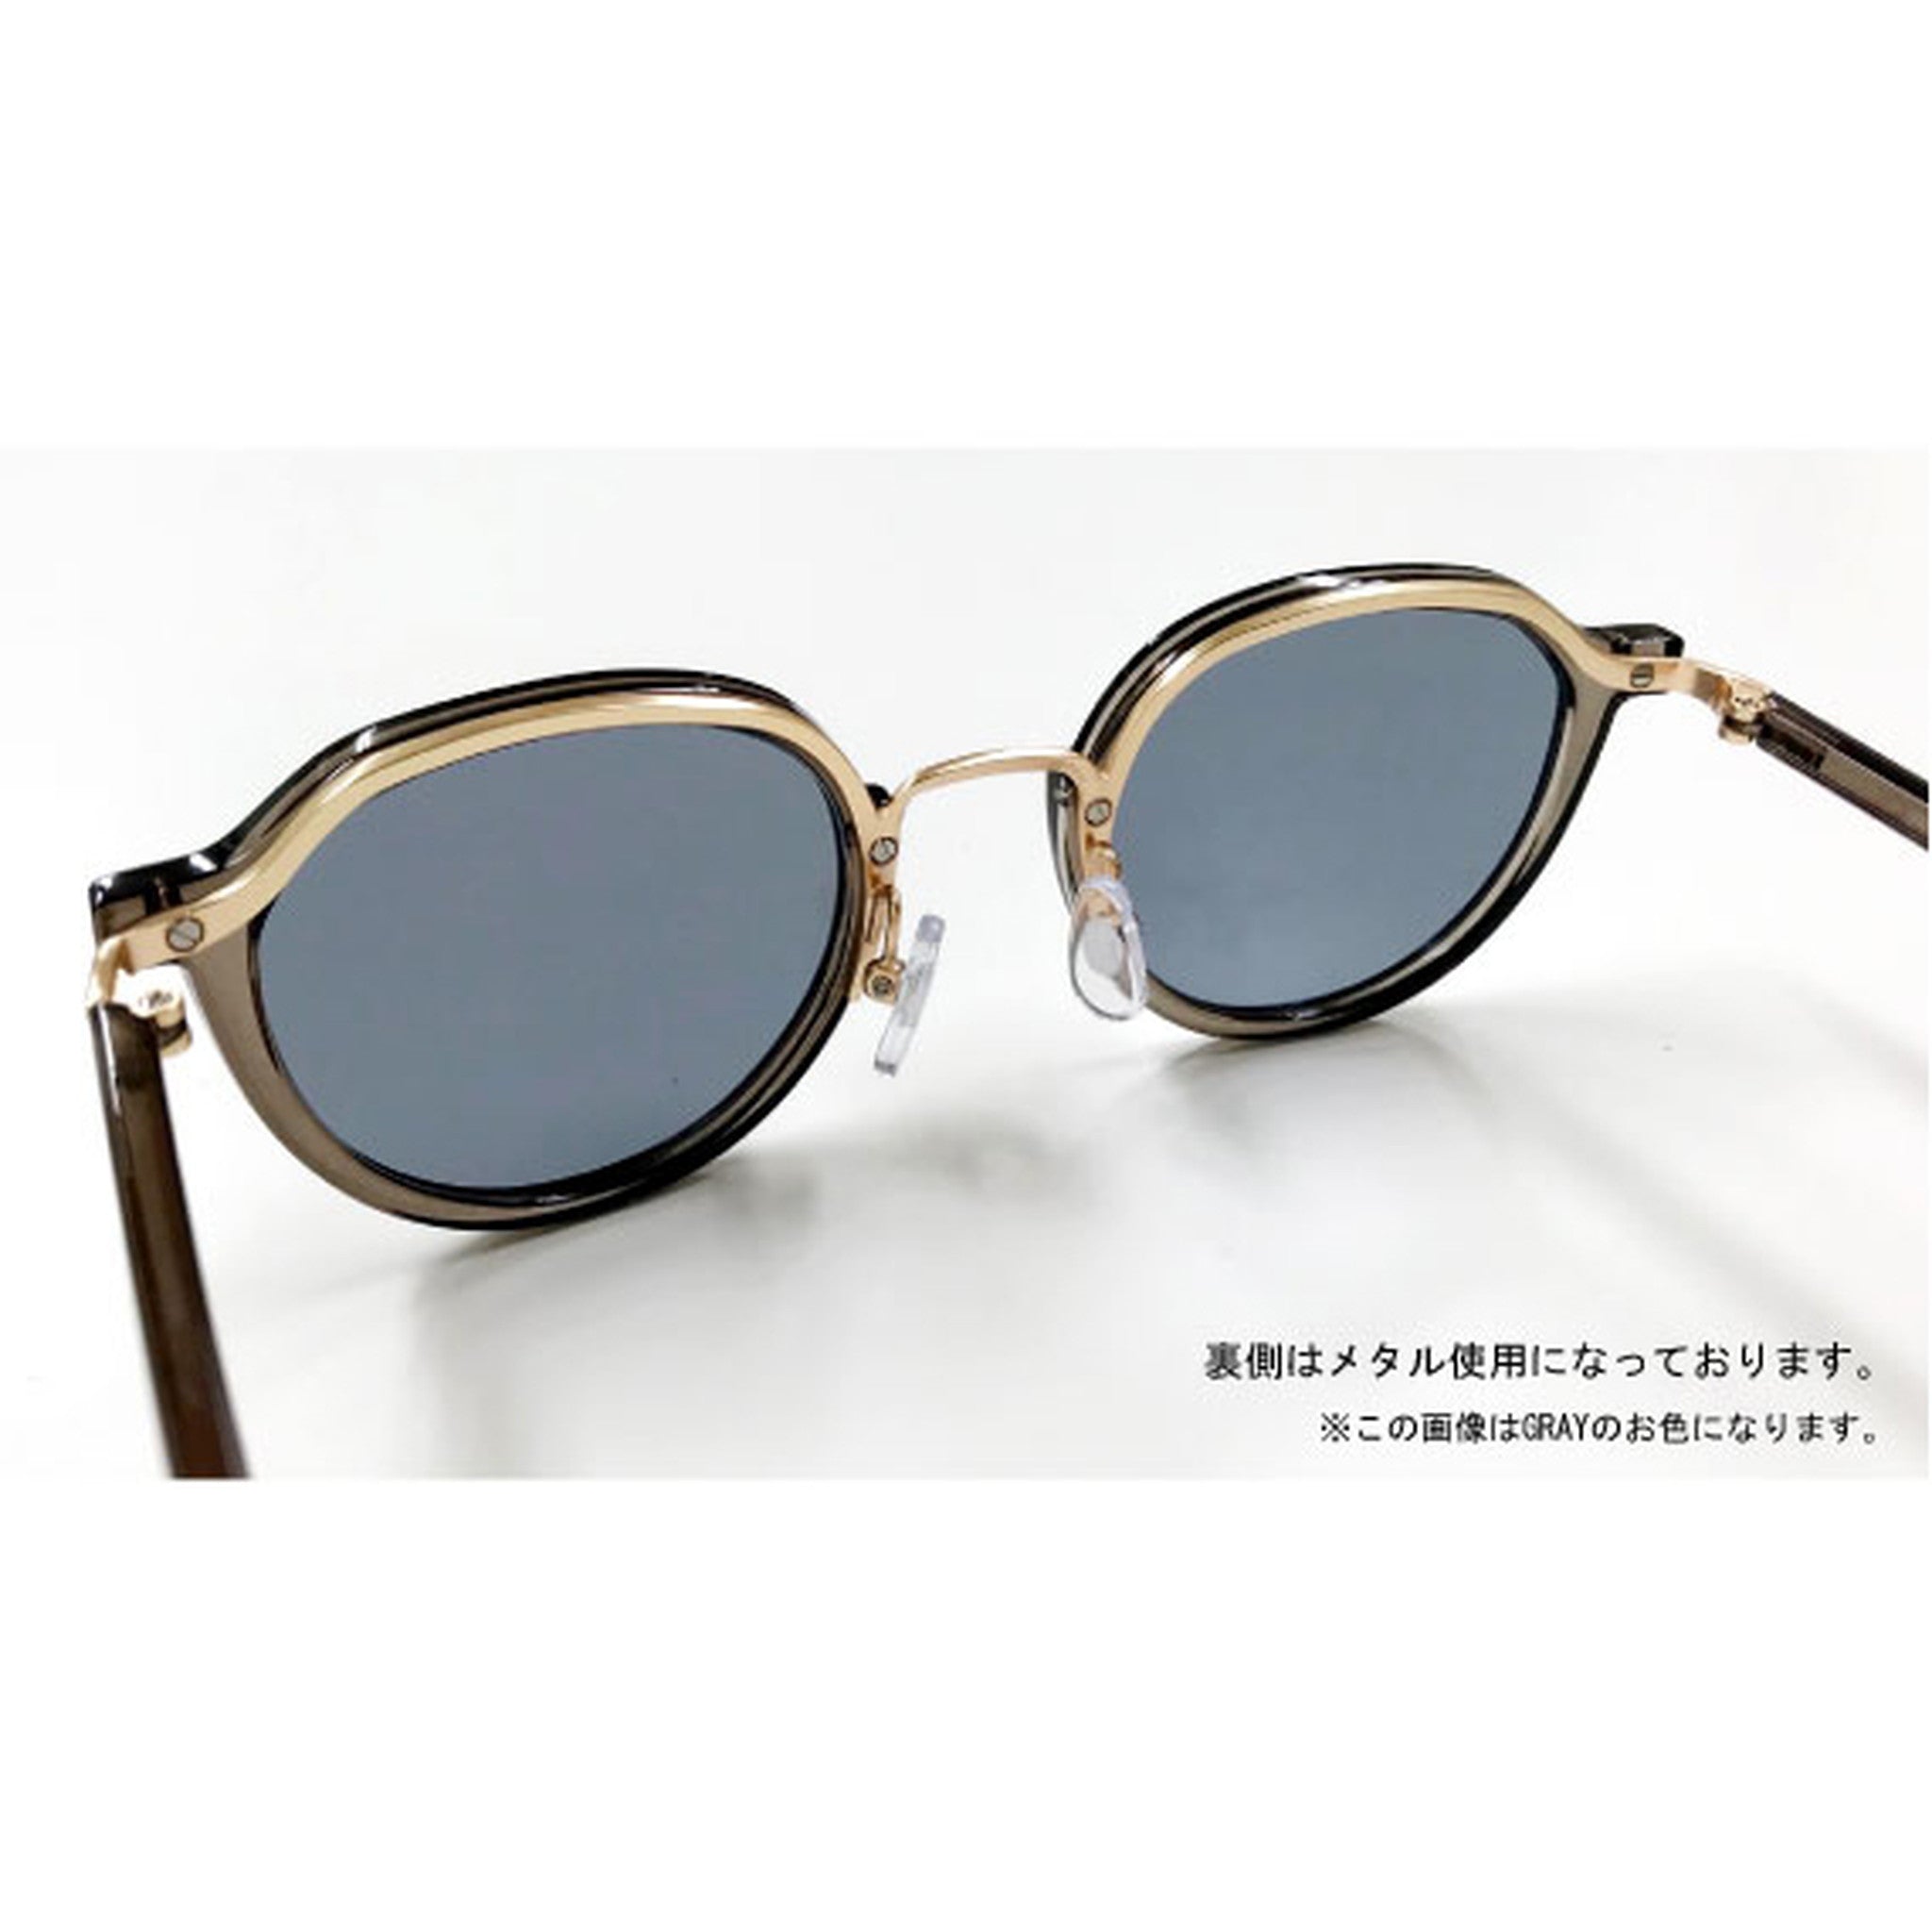 【Ciqi】DONNY サングラス Gray Gray Lens sunglasses(ダニー グレー グレーレンズ)